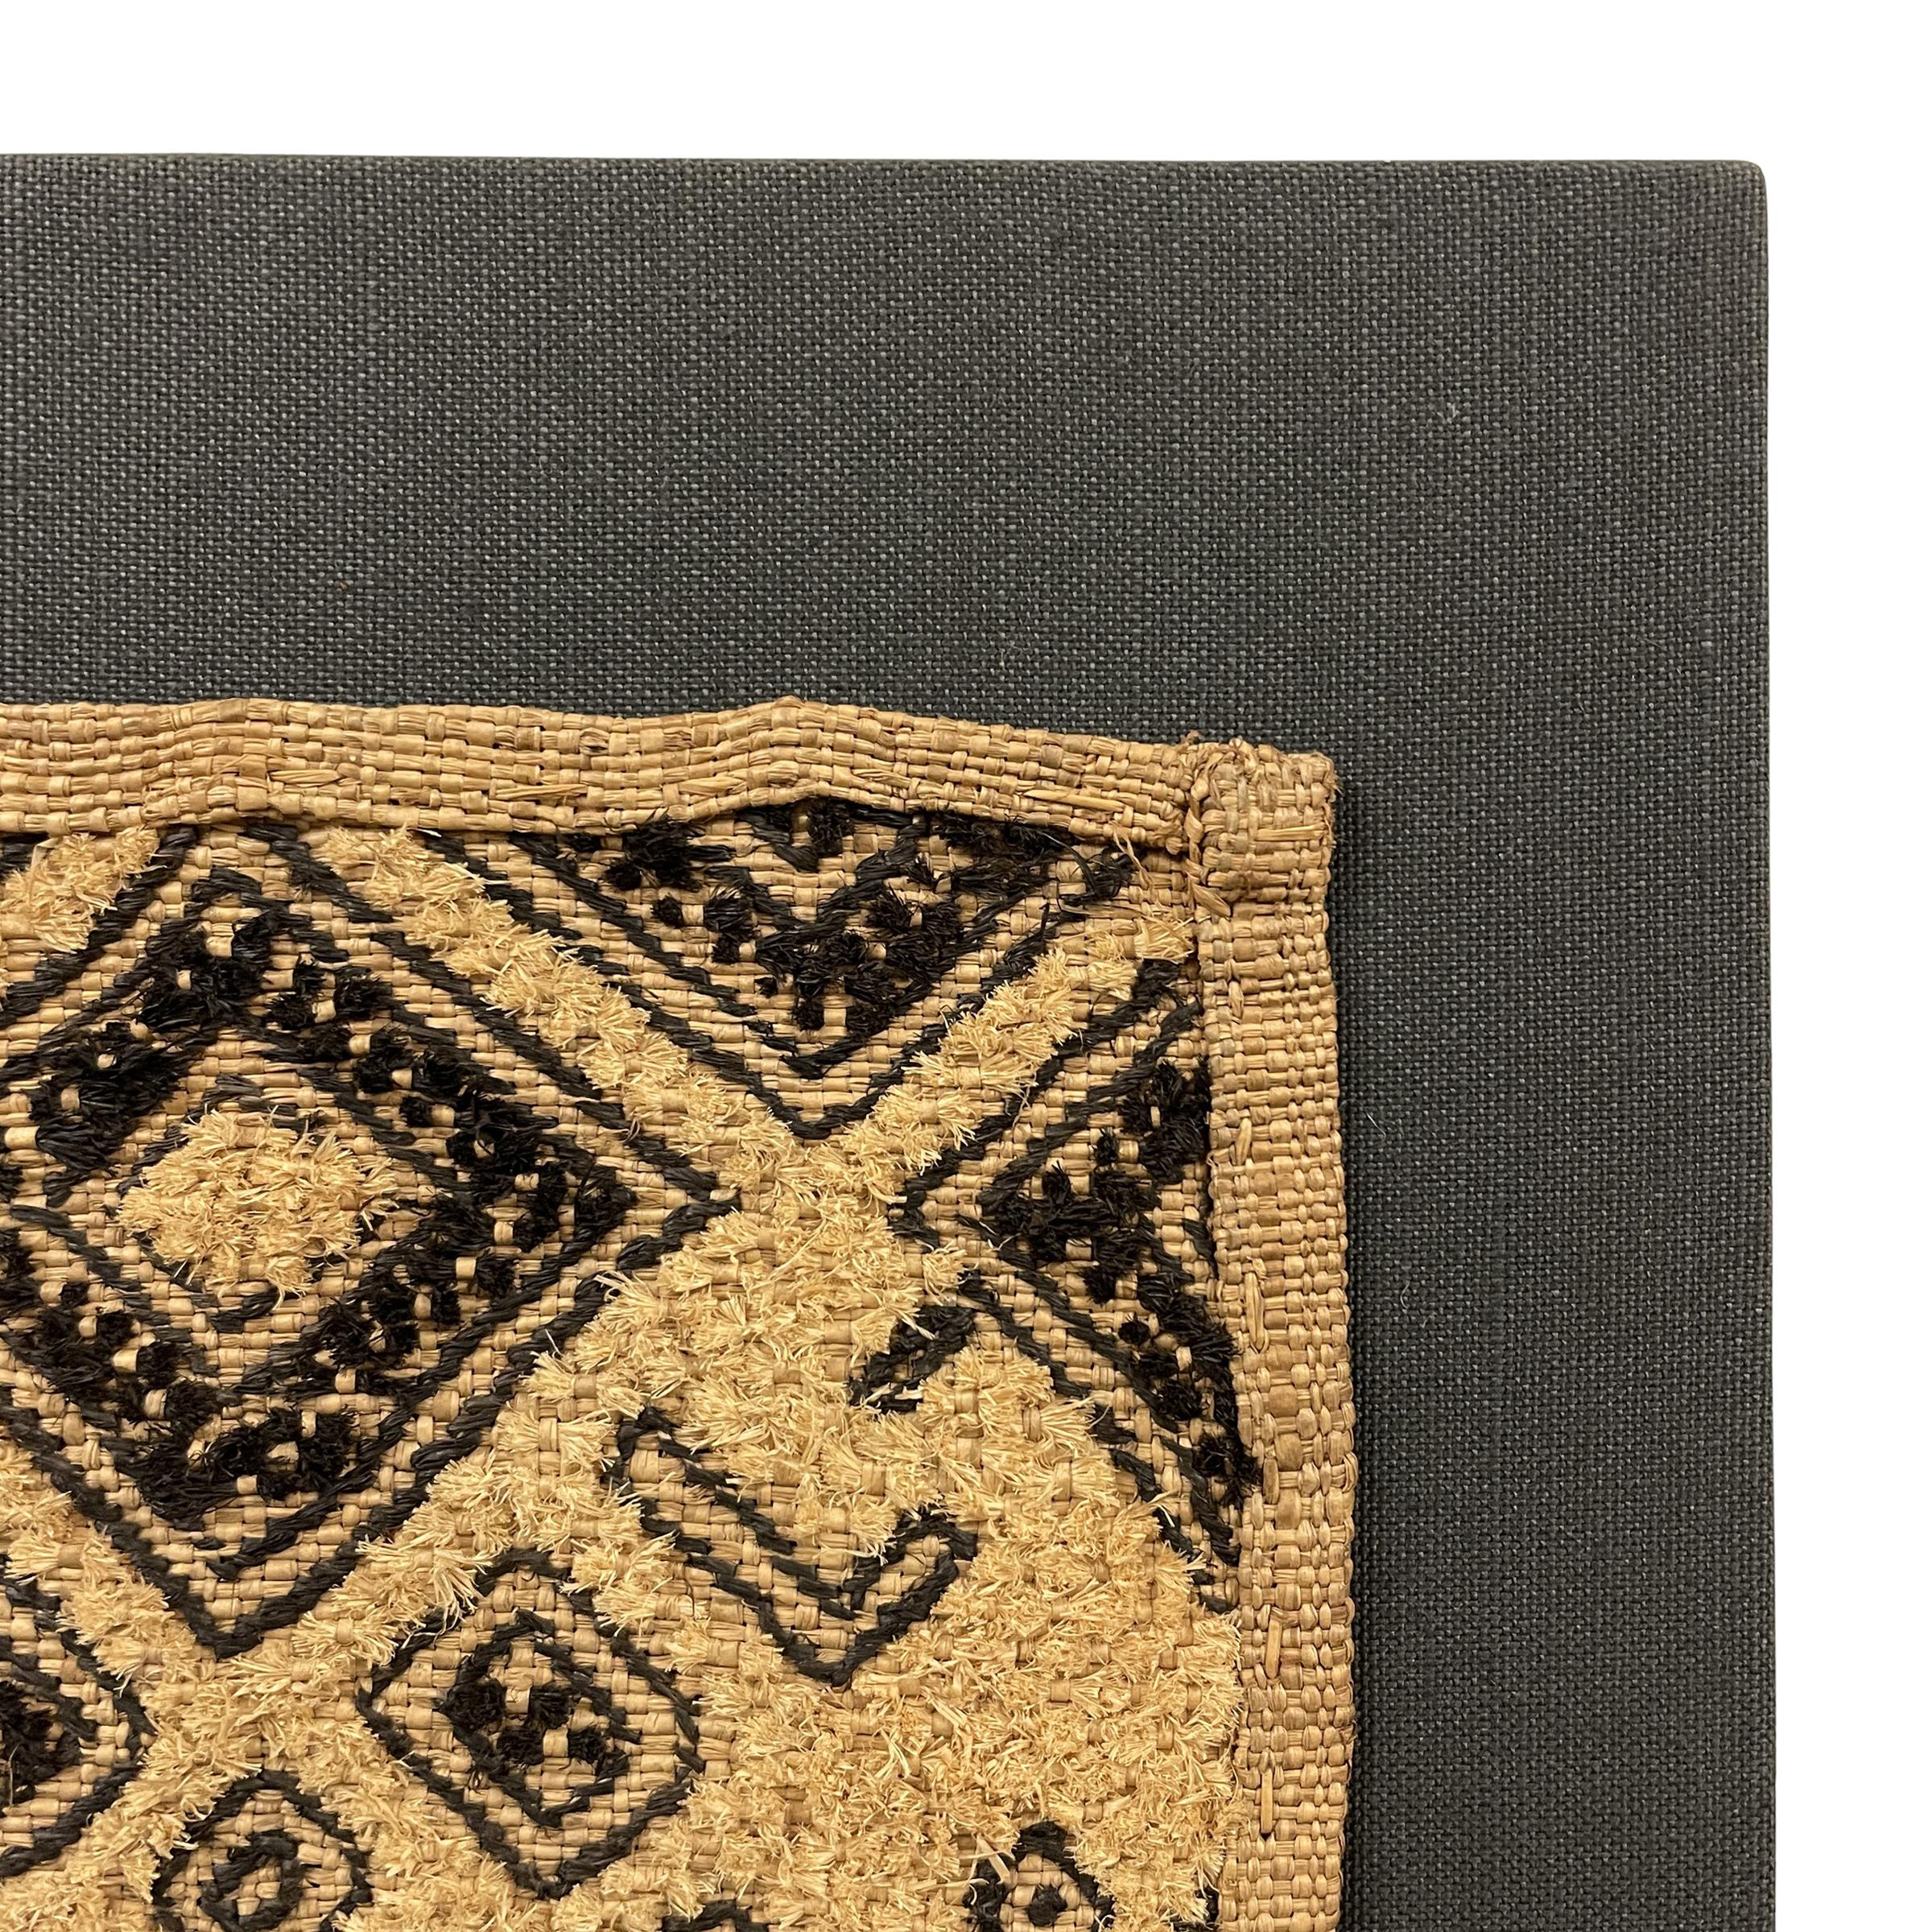 Tribal Tongue-in-Cheek Mounted Kuba Cloth Panel For Sale